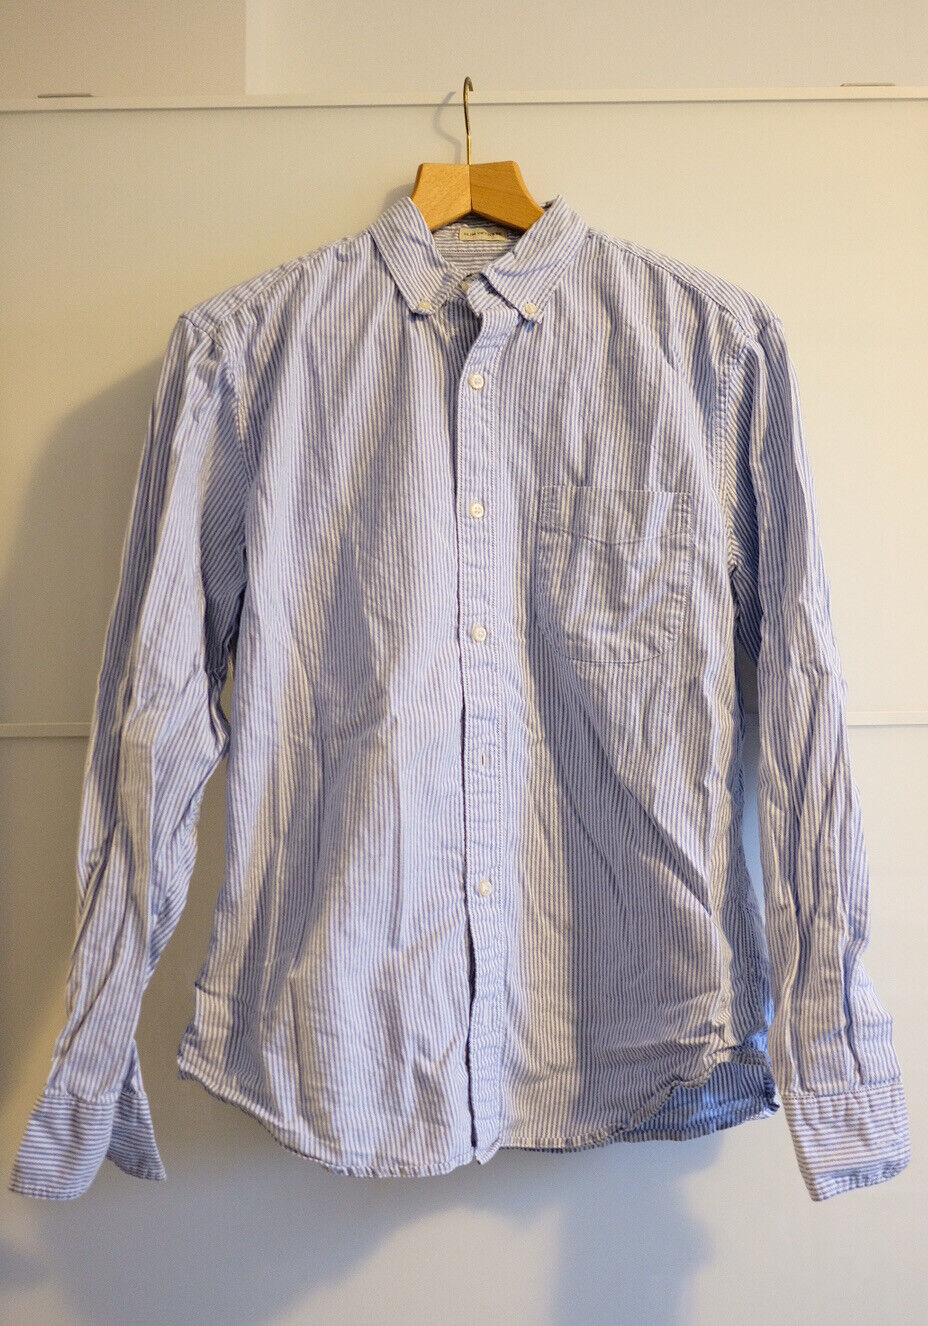 J Crew Slim Untucked Oxford Cloth Shirt - Size M